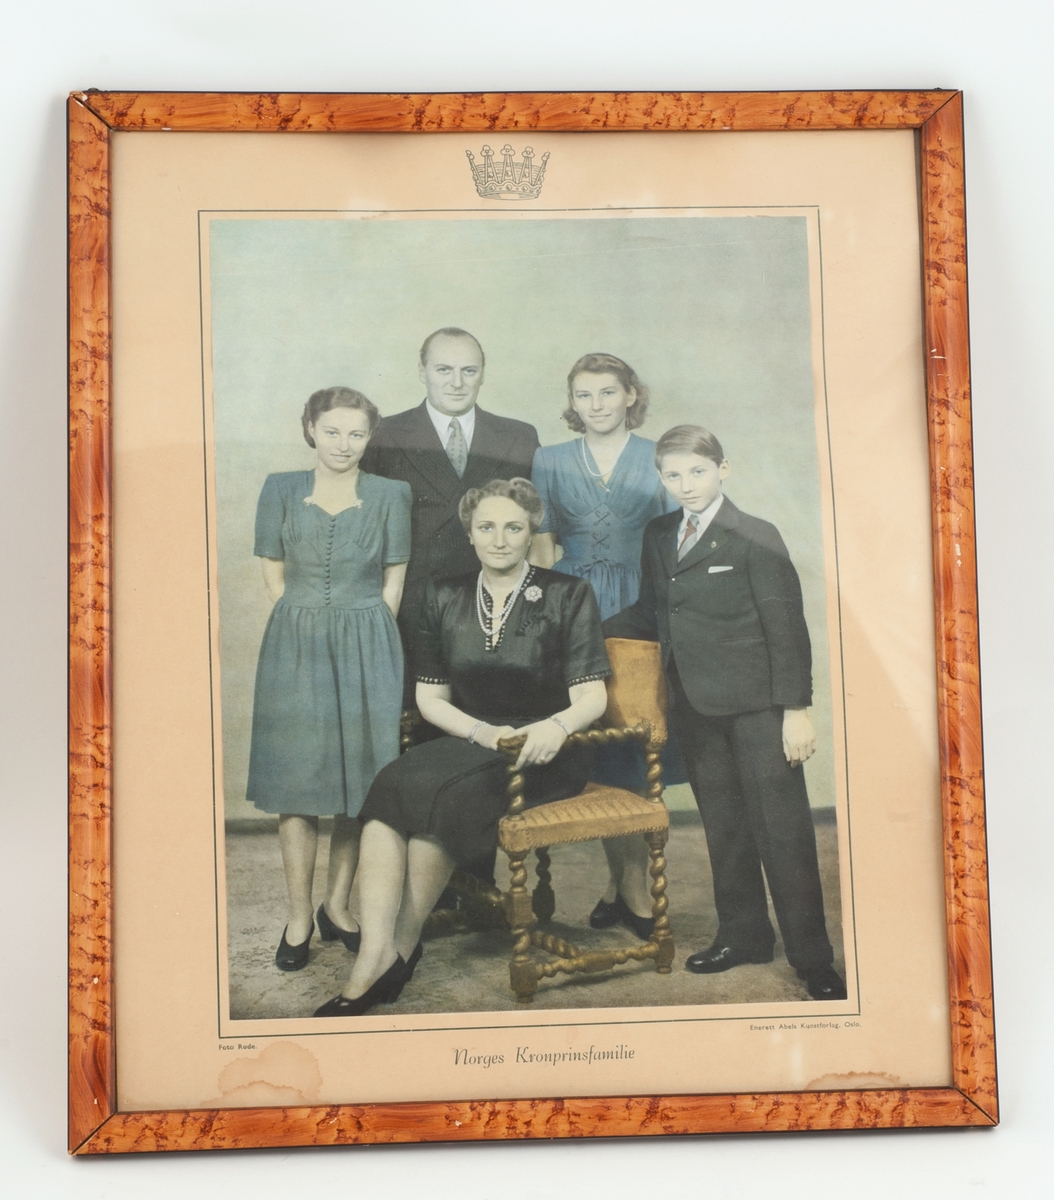 Den norske kronprinsfamilien: Olav og Märtha med barna Ragnhild, Astrid og Harald.